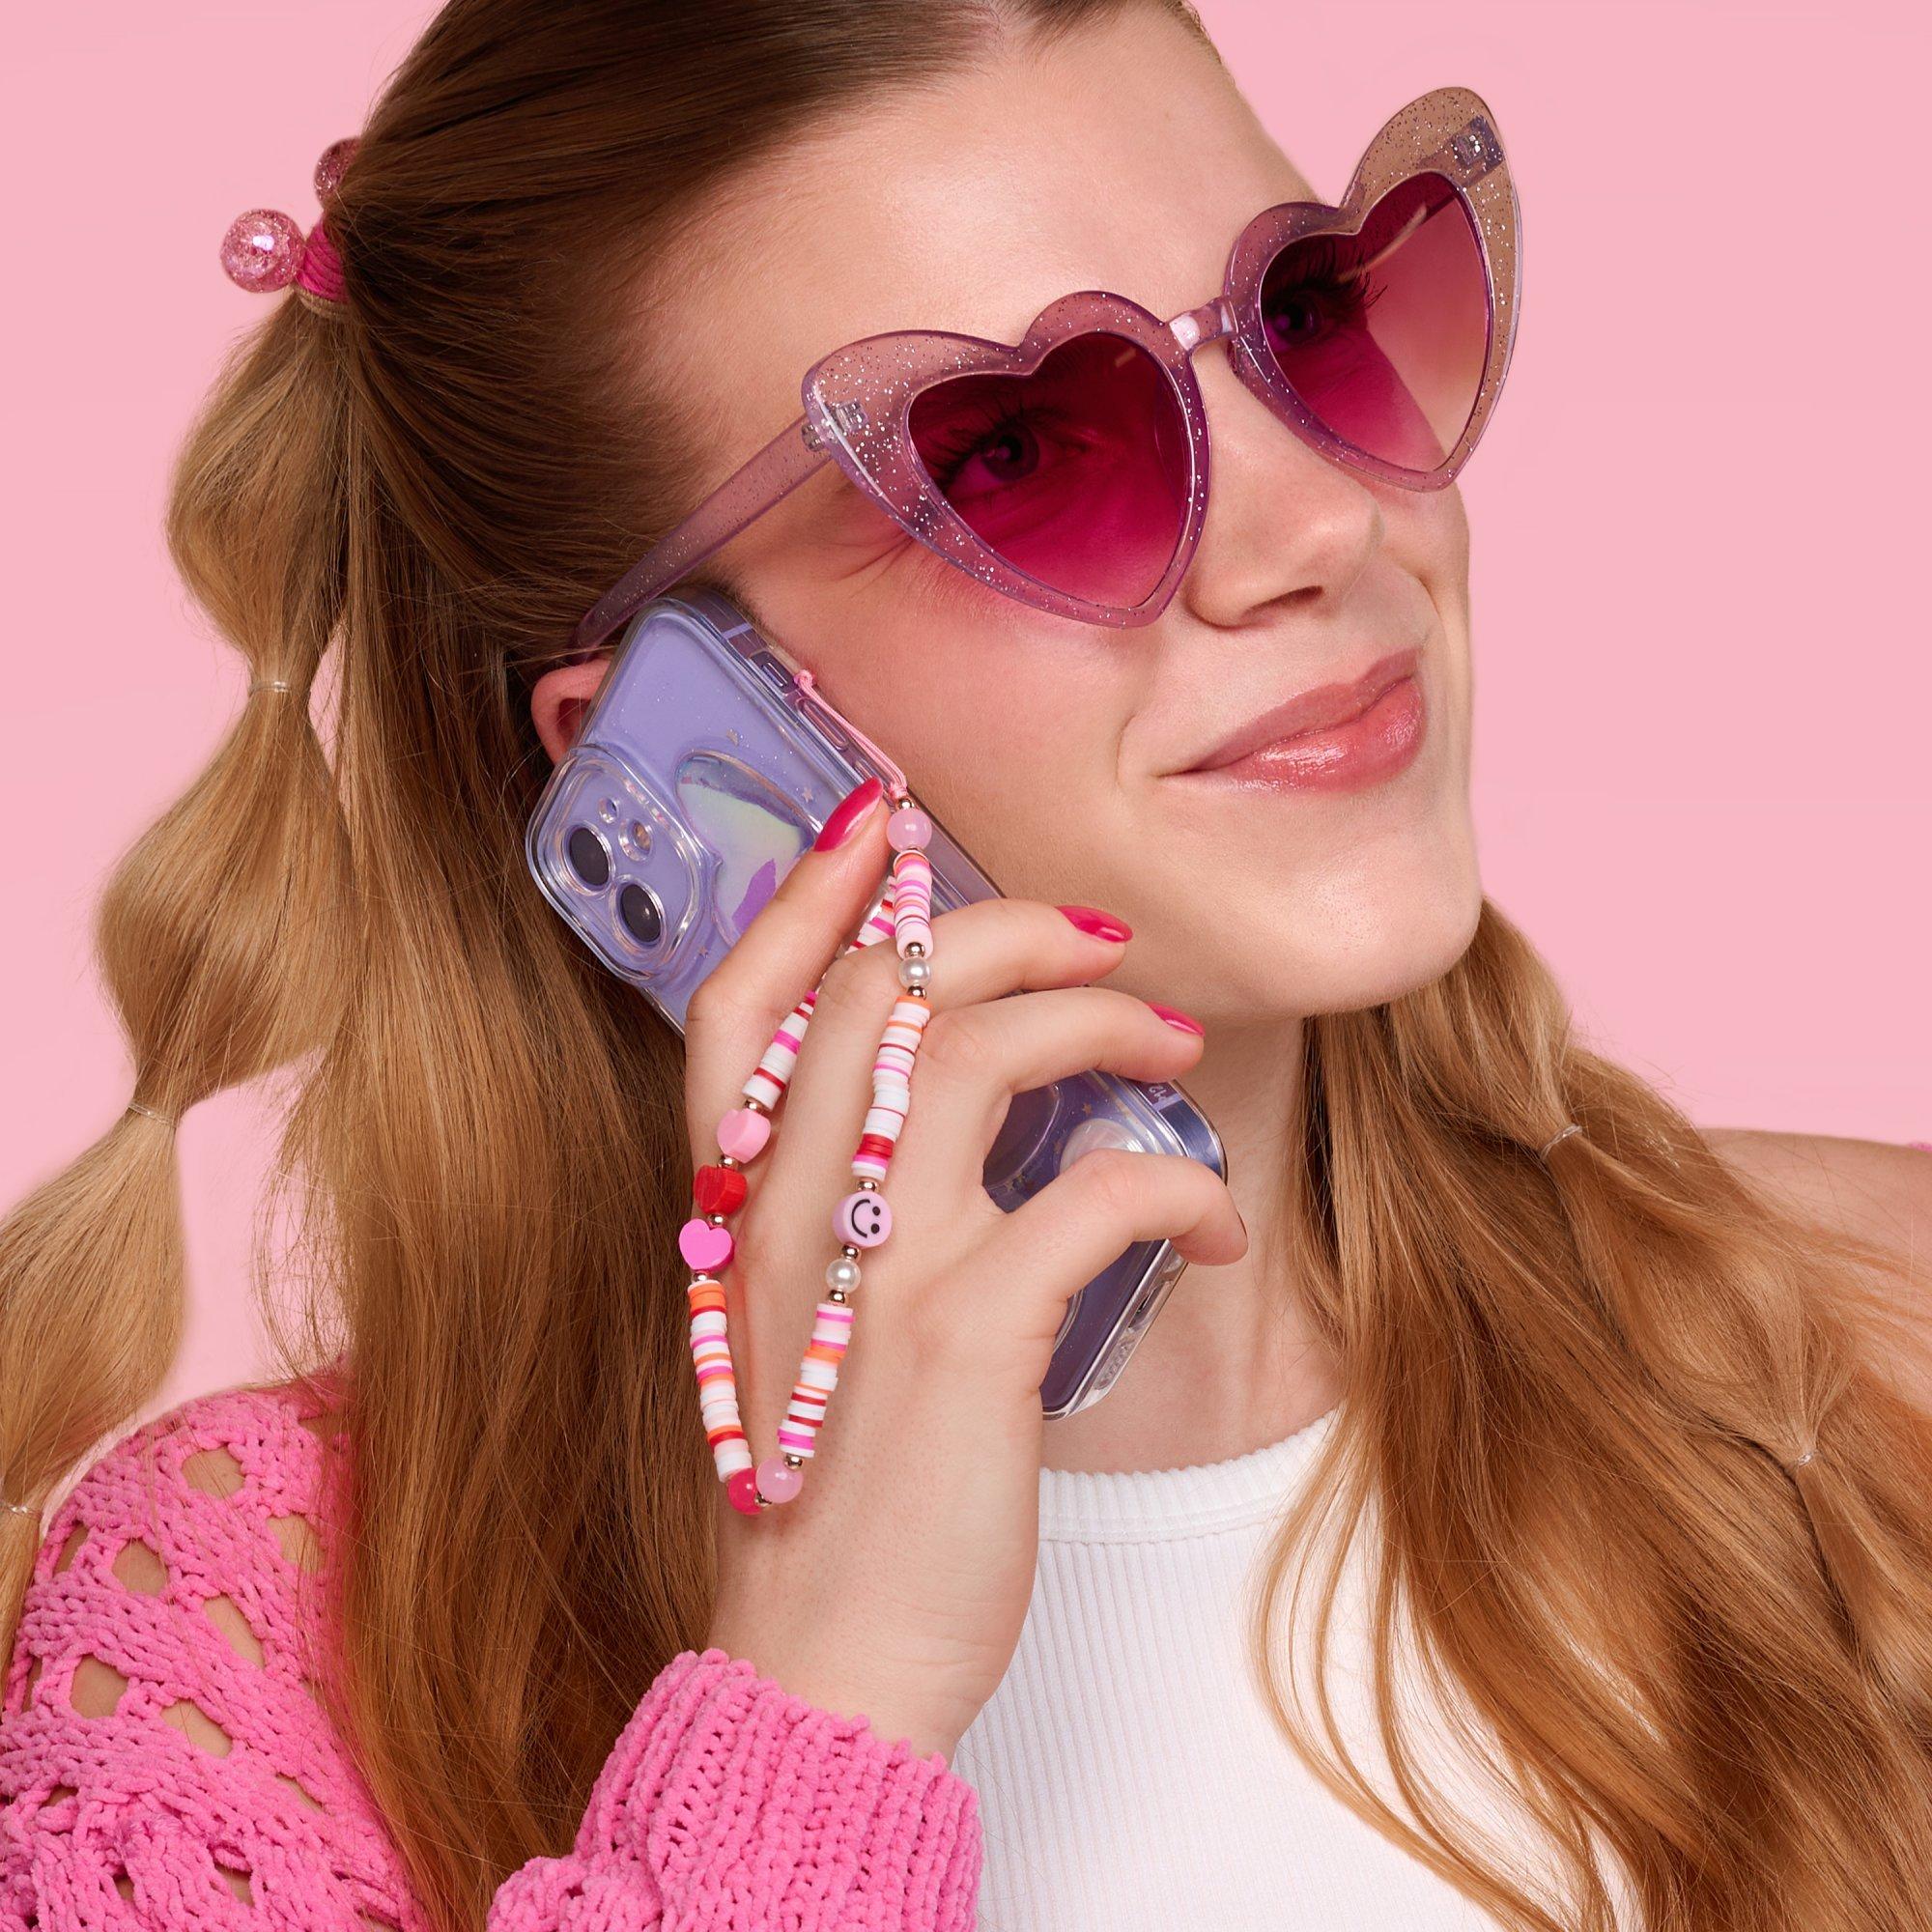 ez a Bubble Gum fun telefon charm